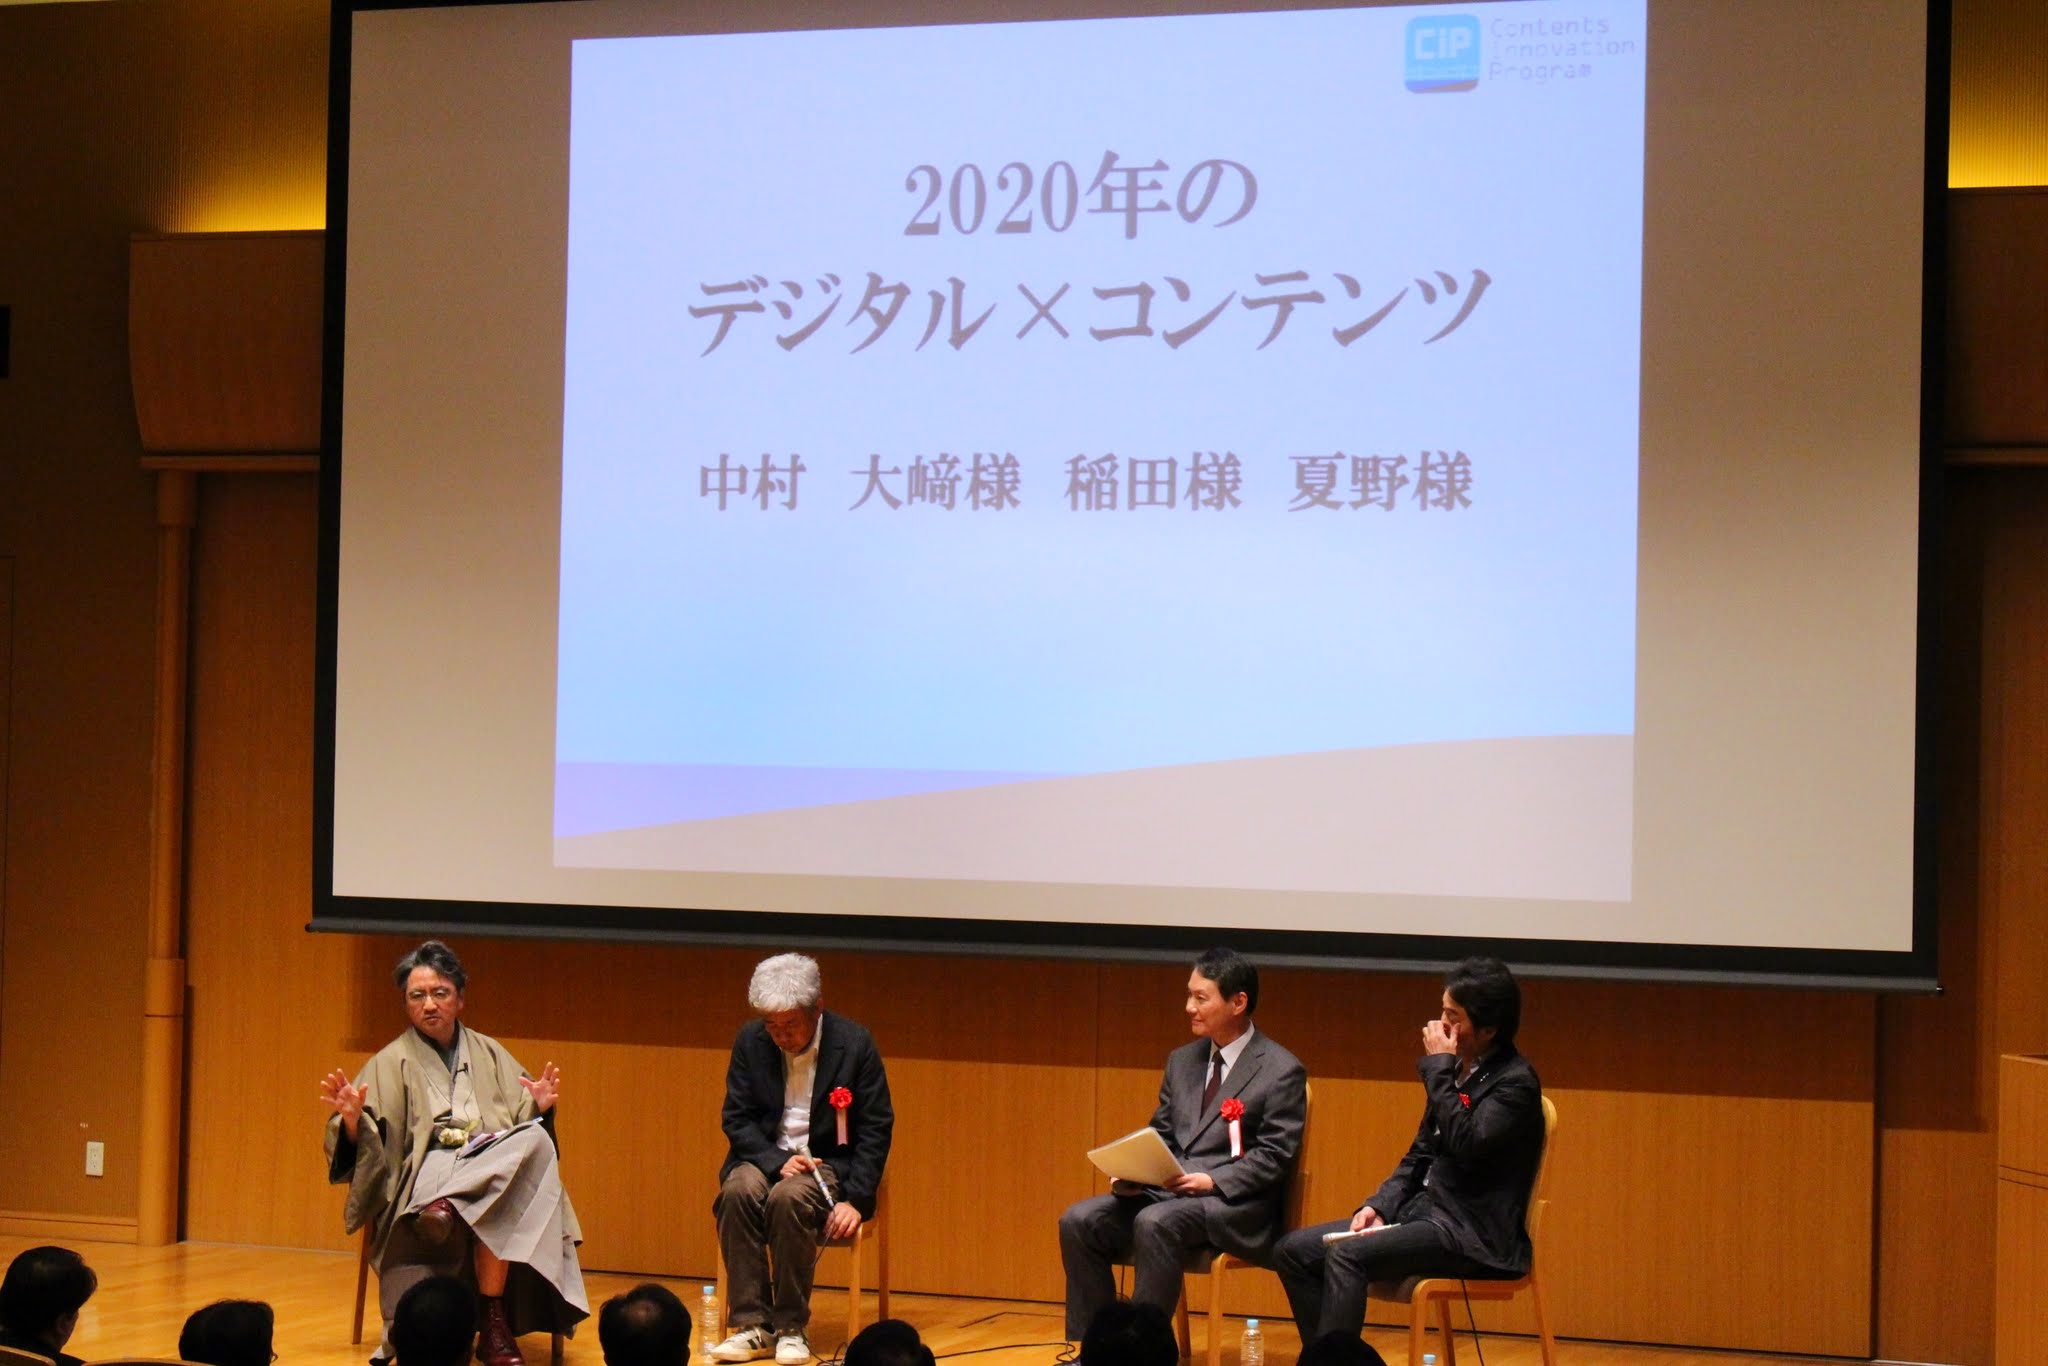 From left: Mr. Nakamura、Mr. Osaki、Mr. Inada、Mr. Natsuno